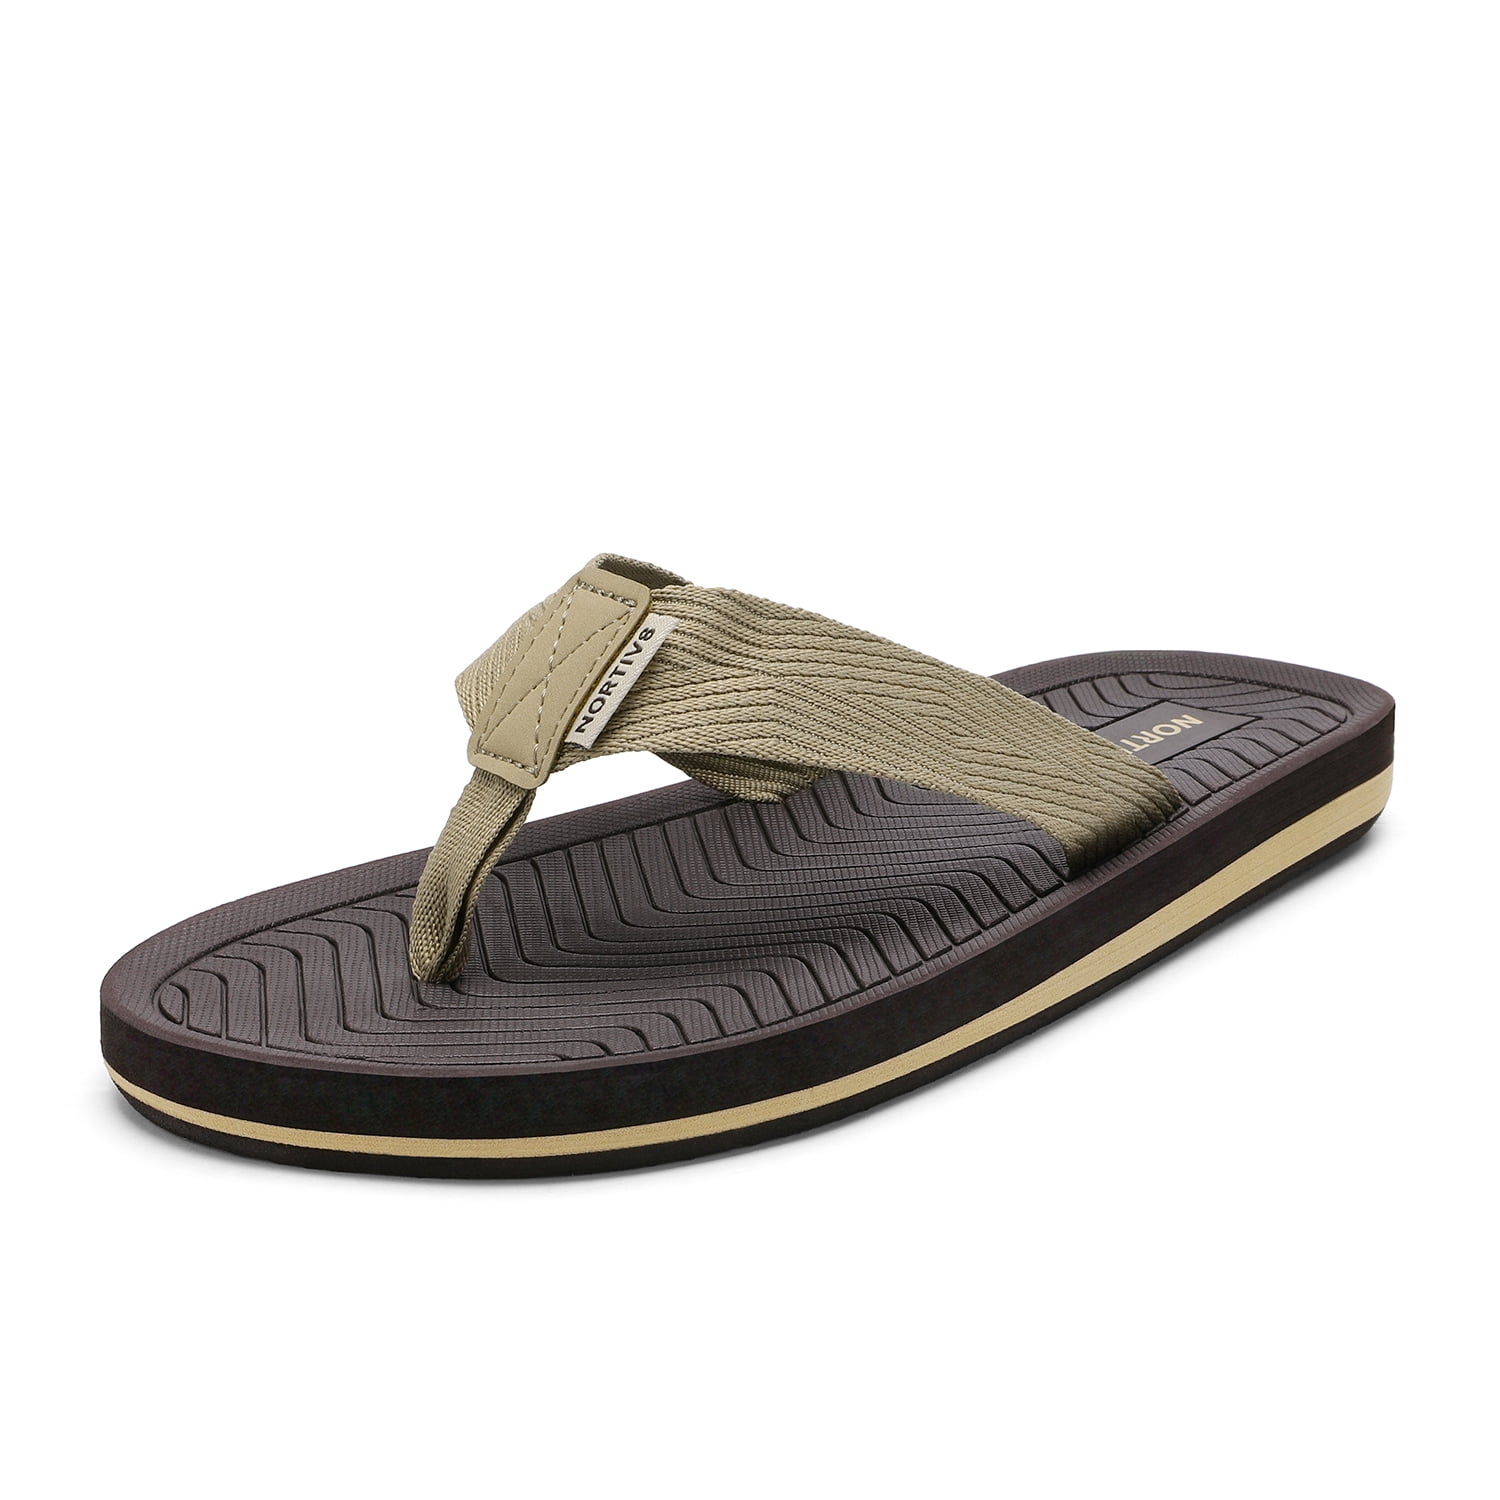 Men's Flip Flops Slippers Comfortable Thong Sandals Casual Shoes Slip Resistant 